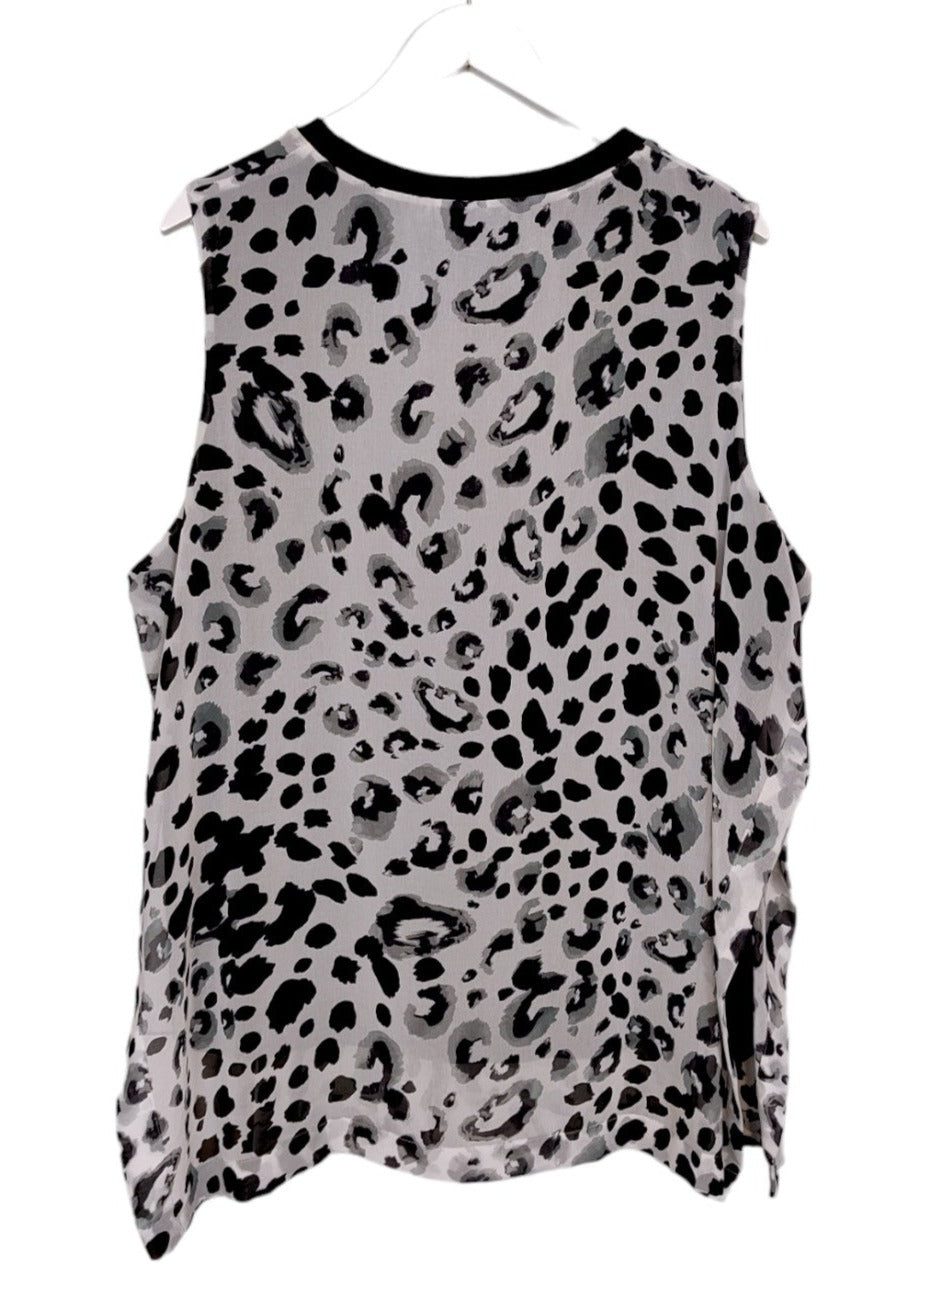 Stock, Αμάνικη Γυναικεία Μπλούζα M&S σε Aminal Print Μαύρο-Λευκό χρώμα (Large)